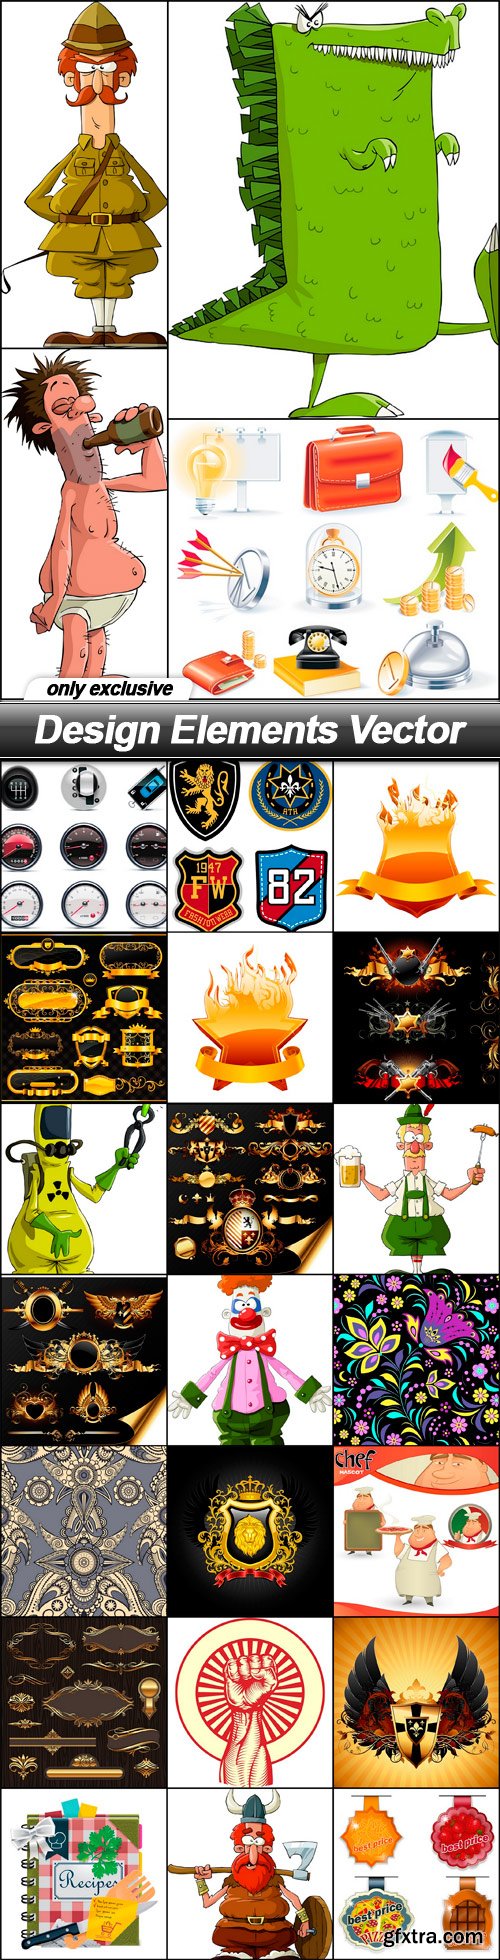 Design Elements Vector - 25 EPS